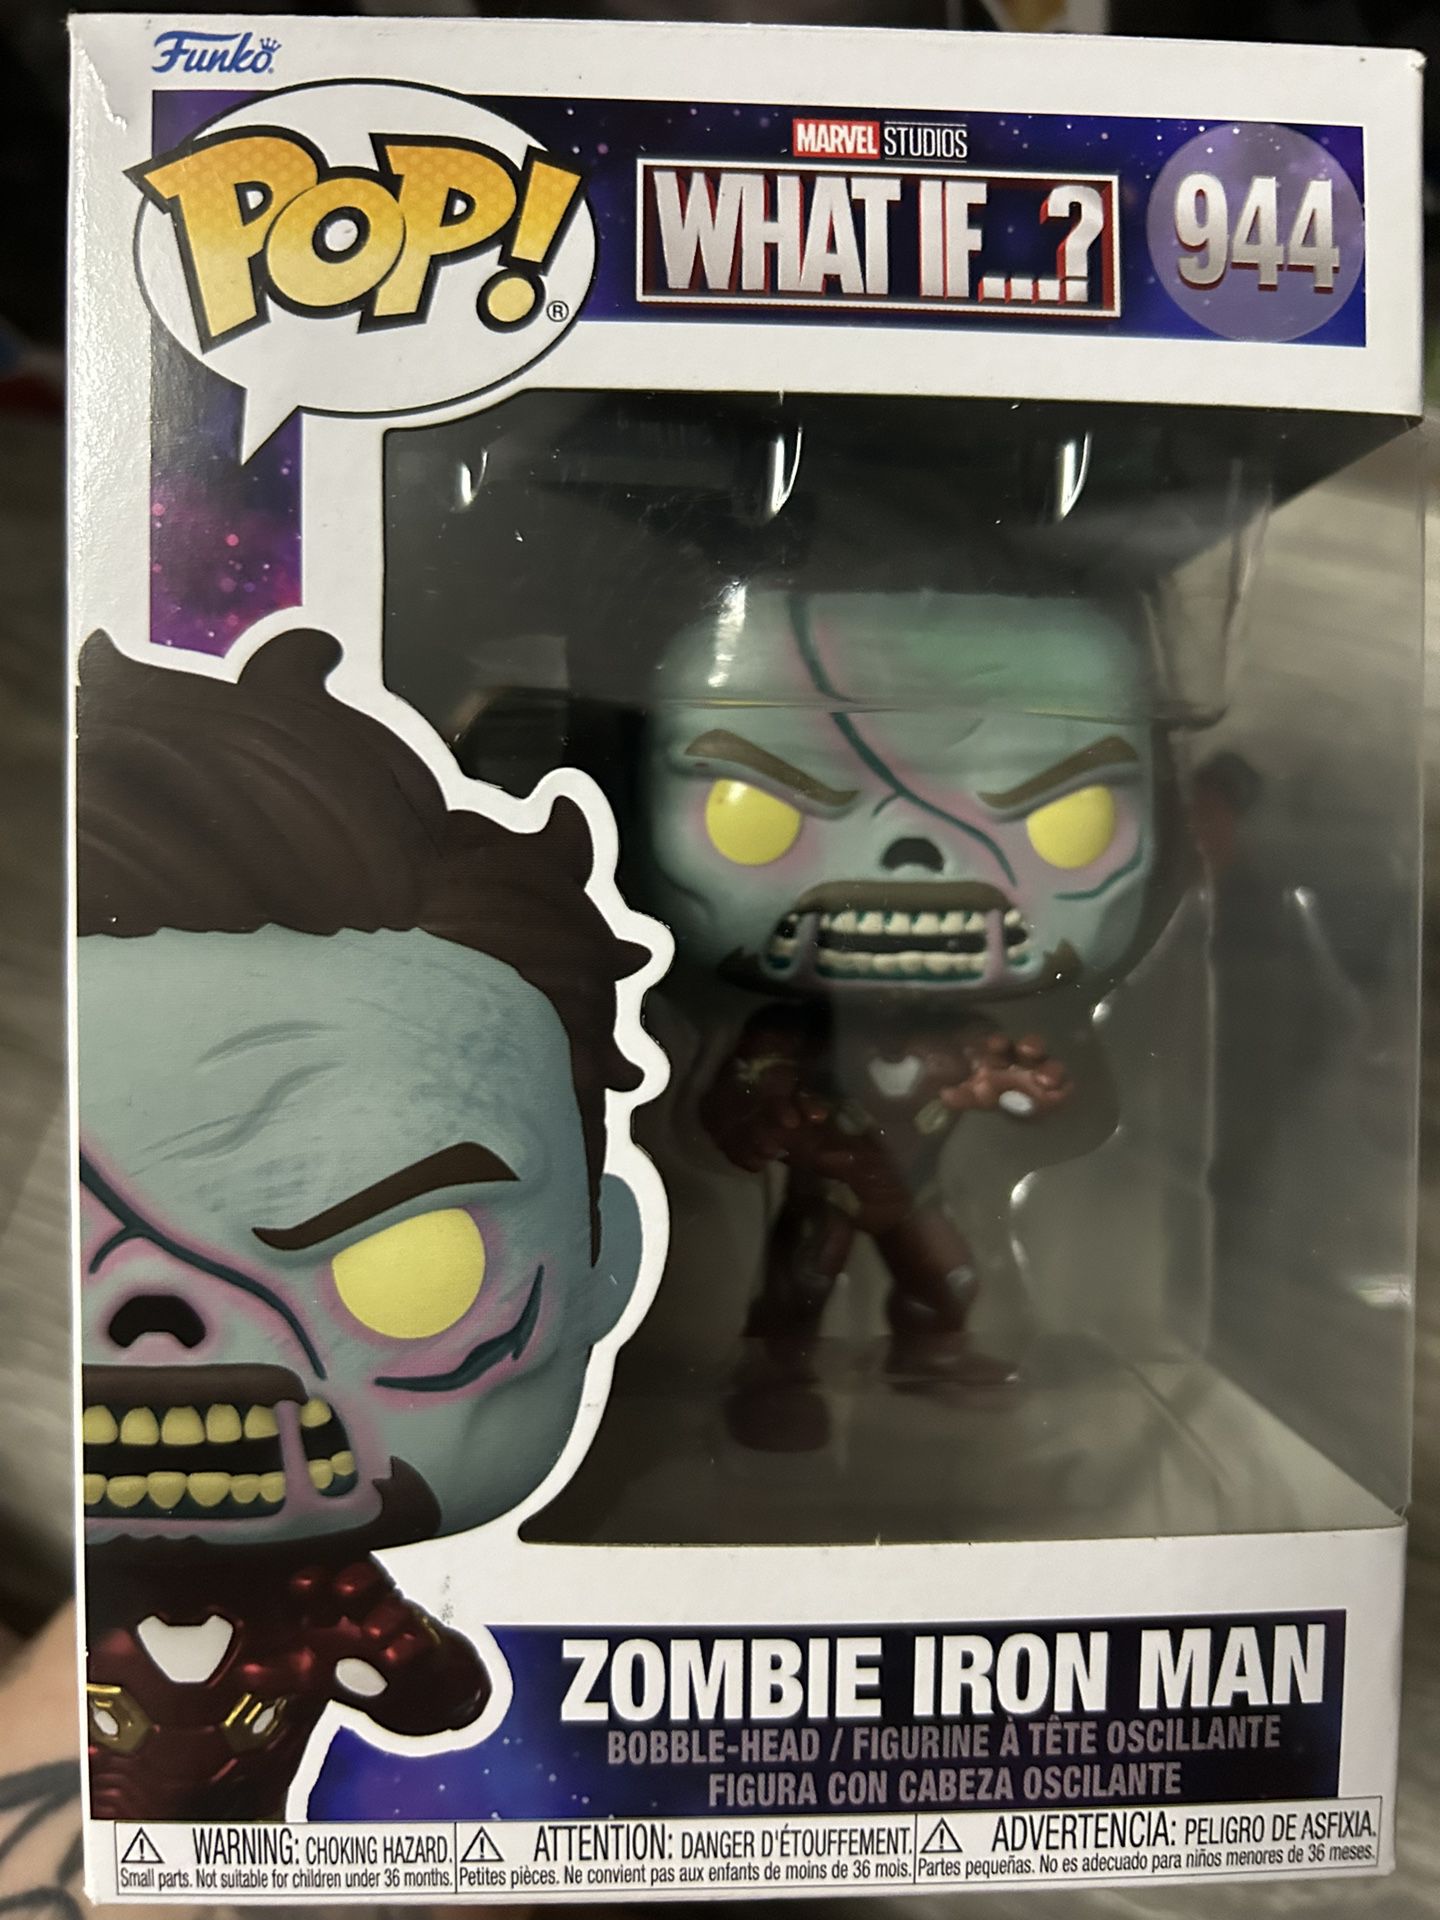 Zombie Iron Man Funko Pop